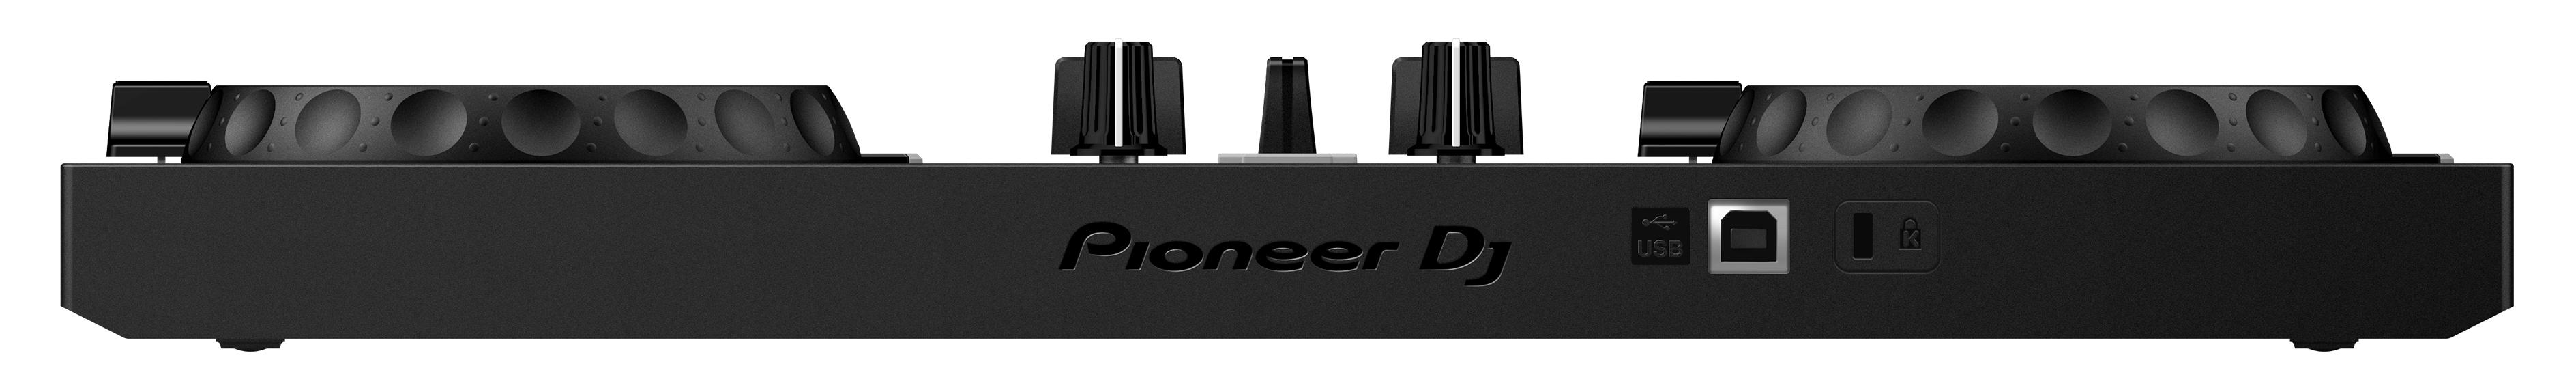 Pioneer DJ DDJ-200 Rear